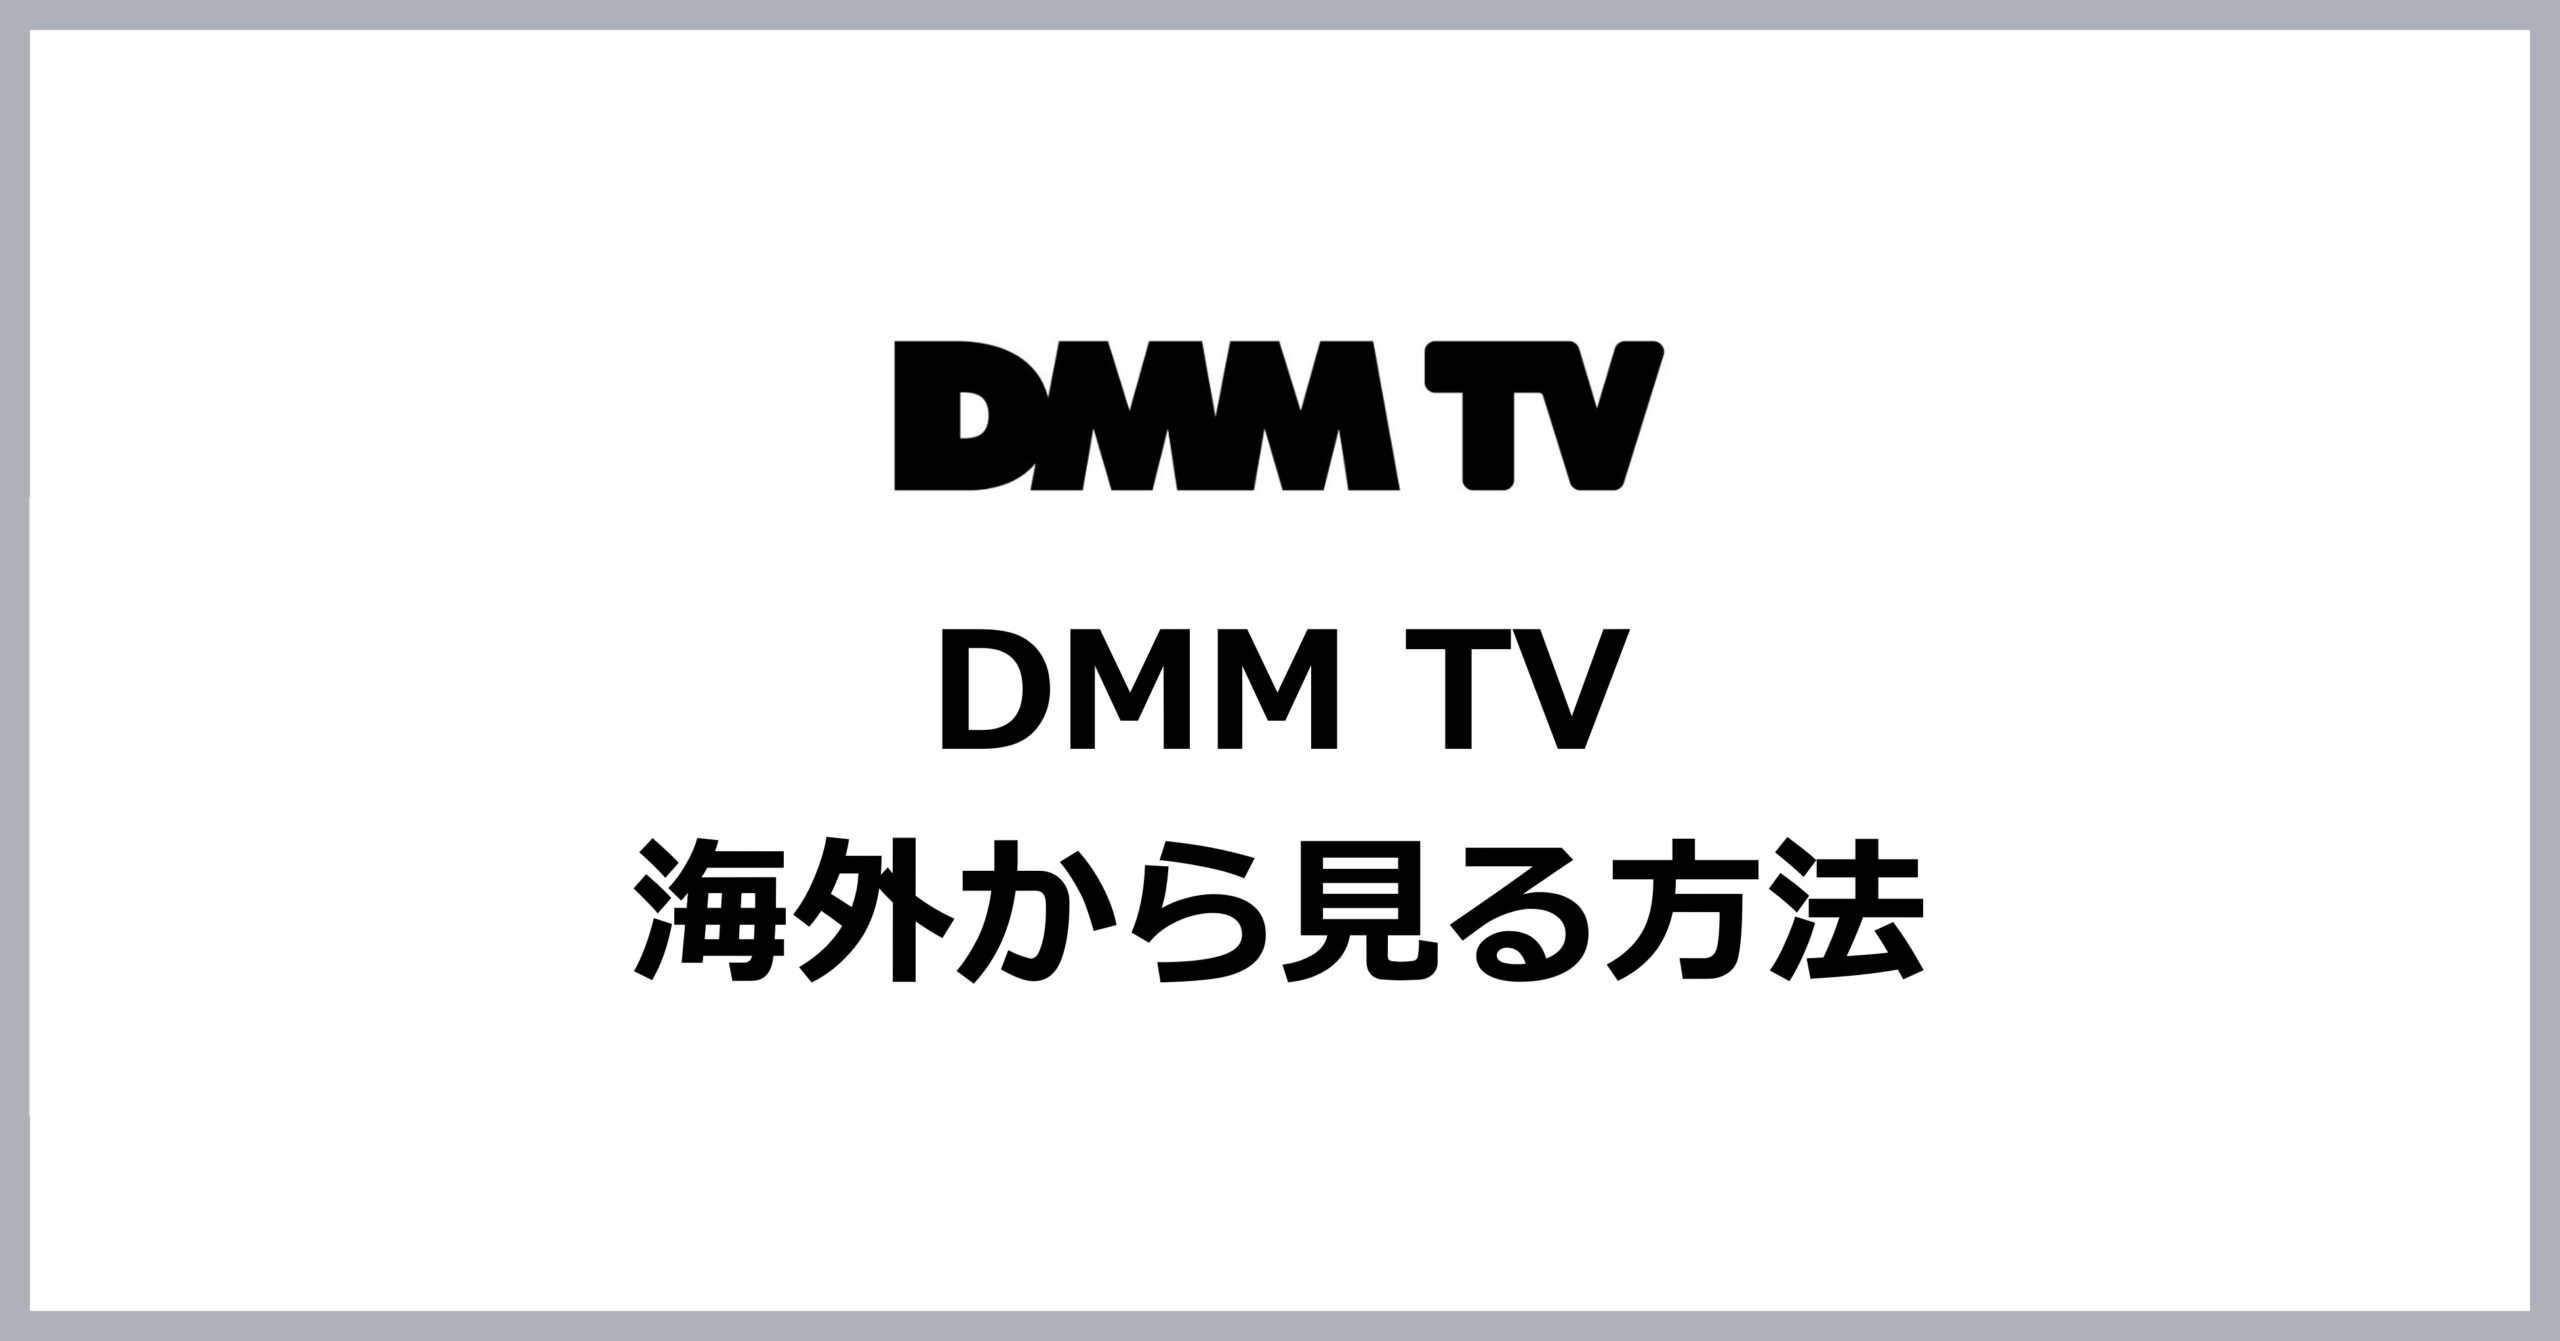 DMM TVを海外から見る方法